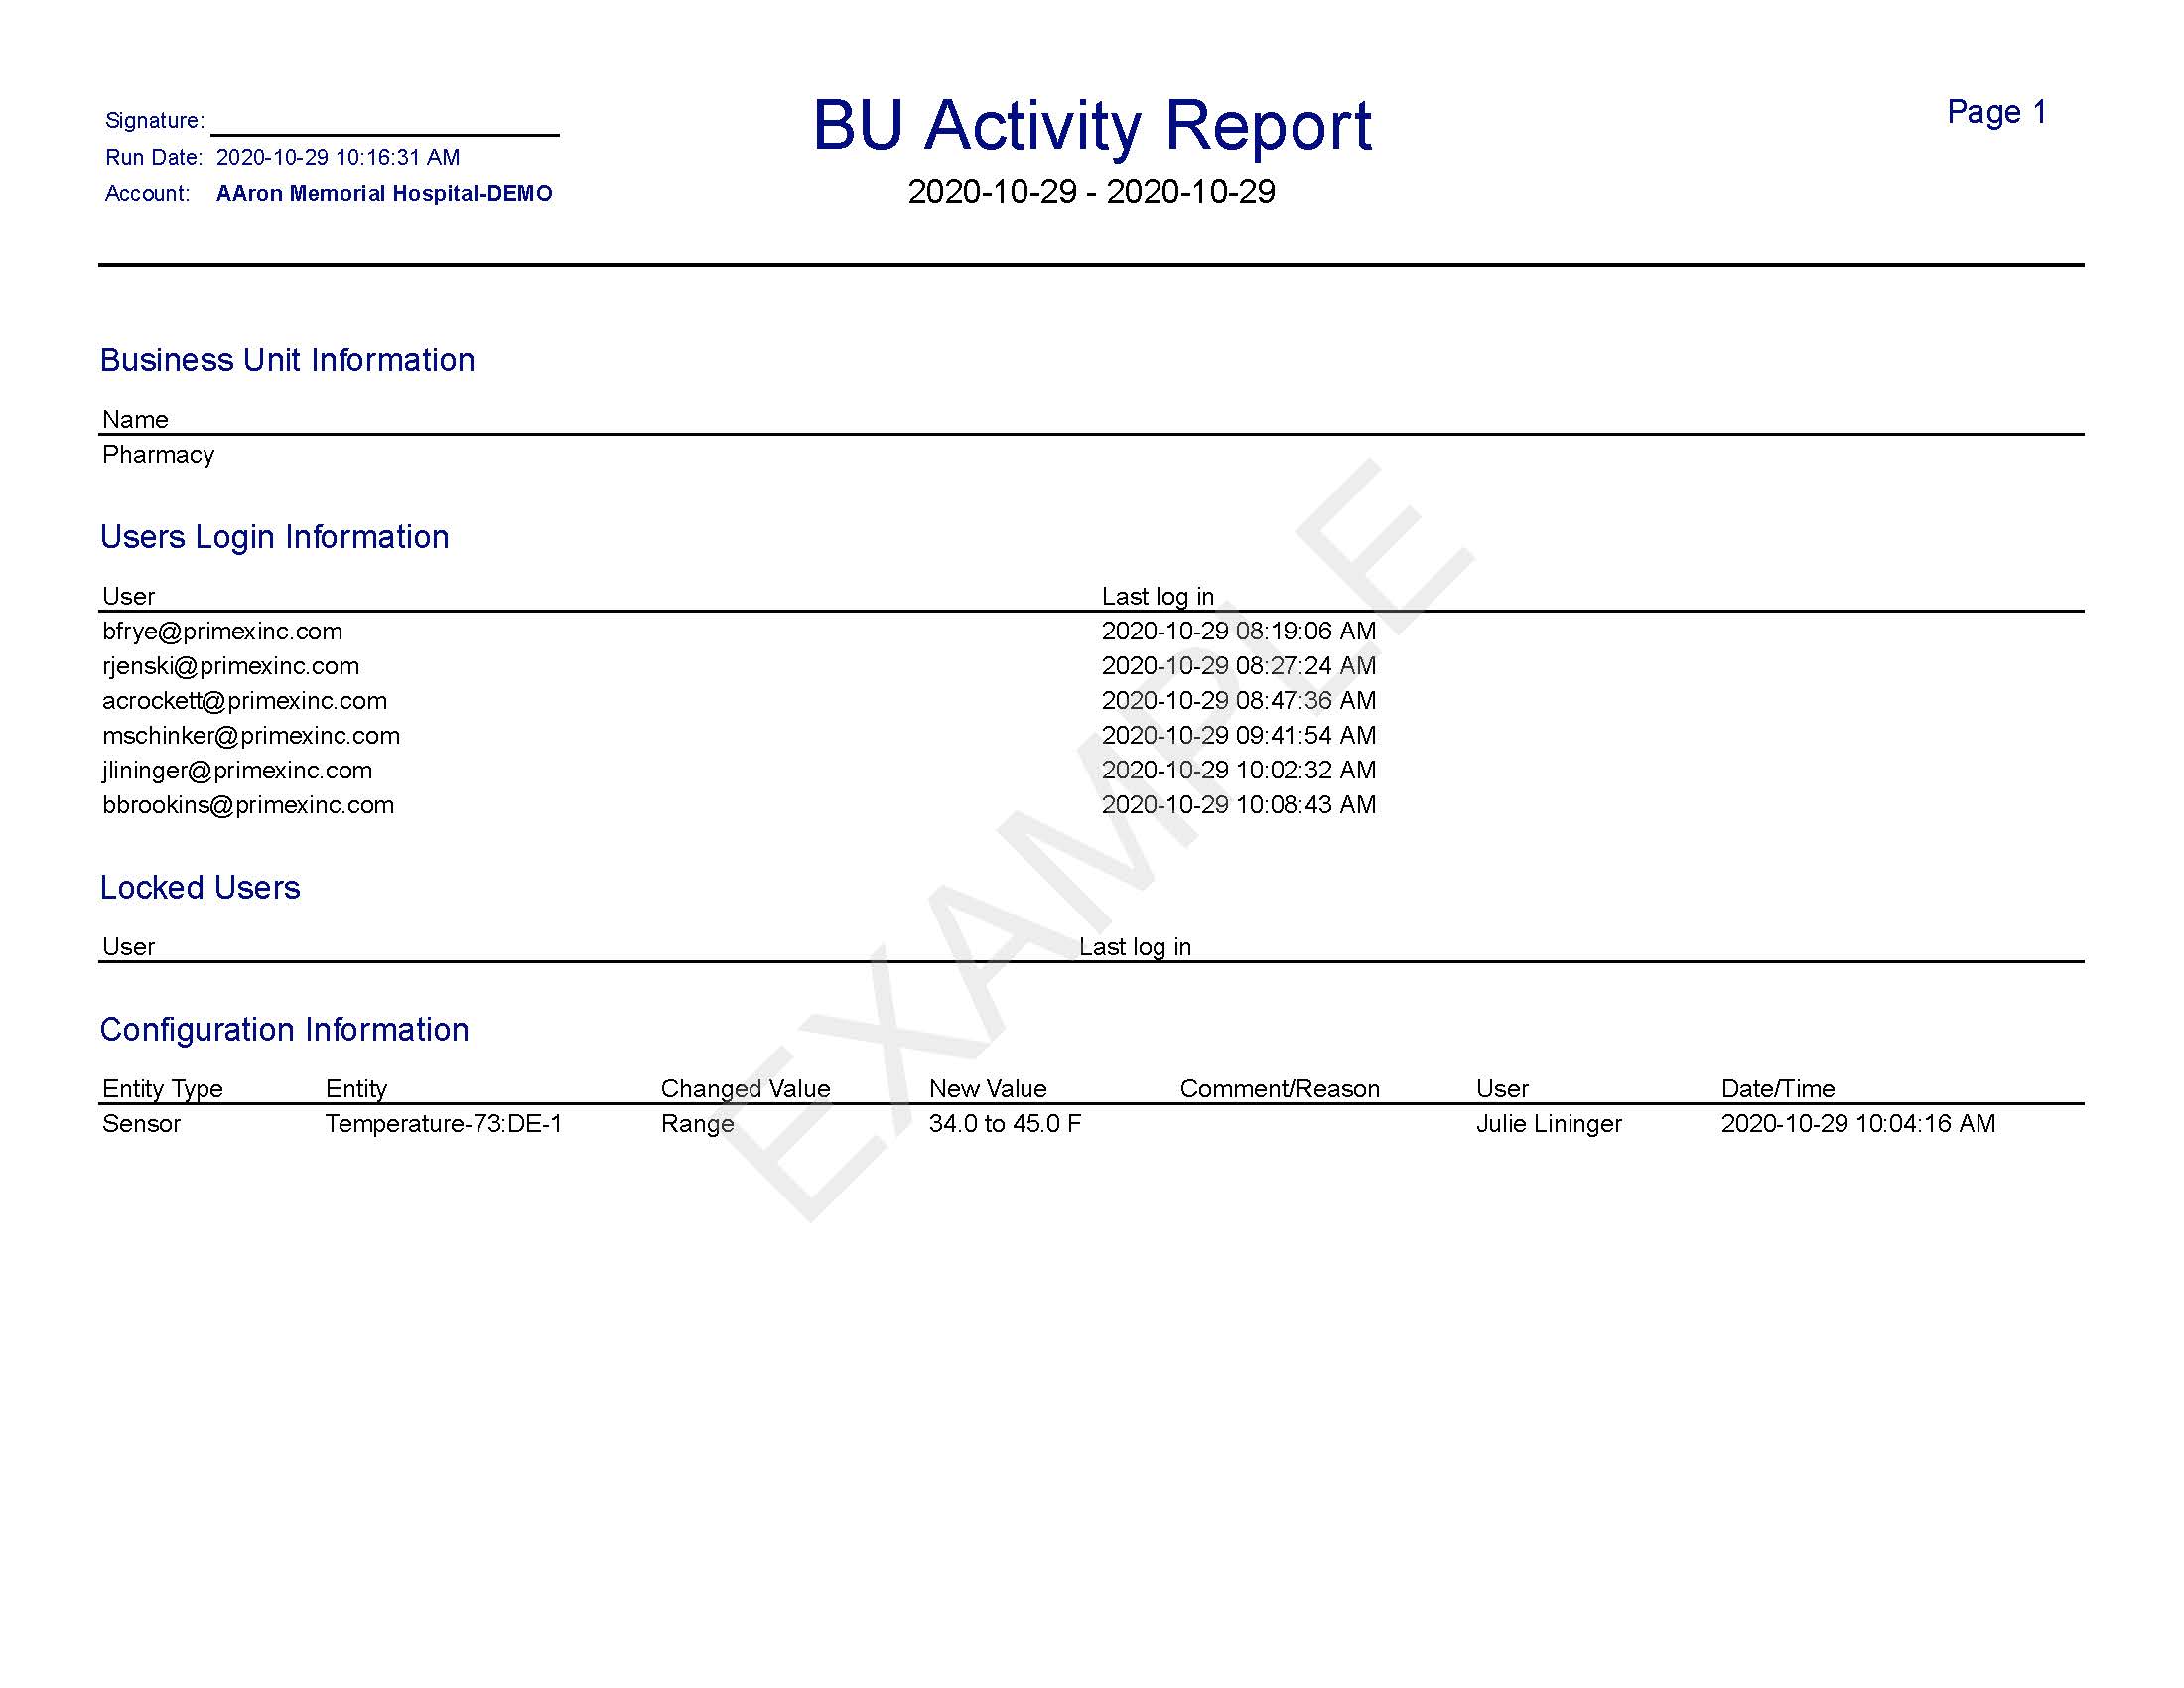 bu-activity-report.pdf